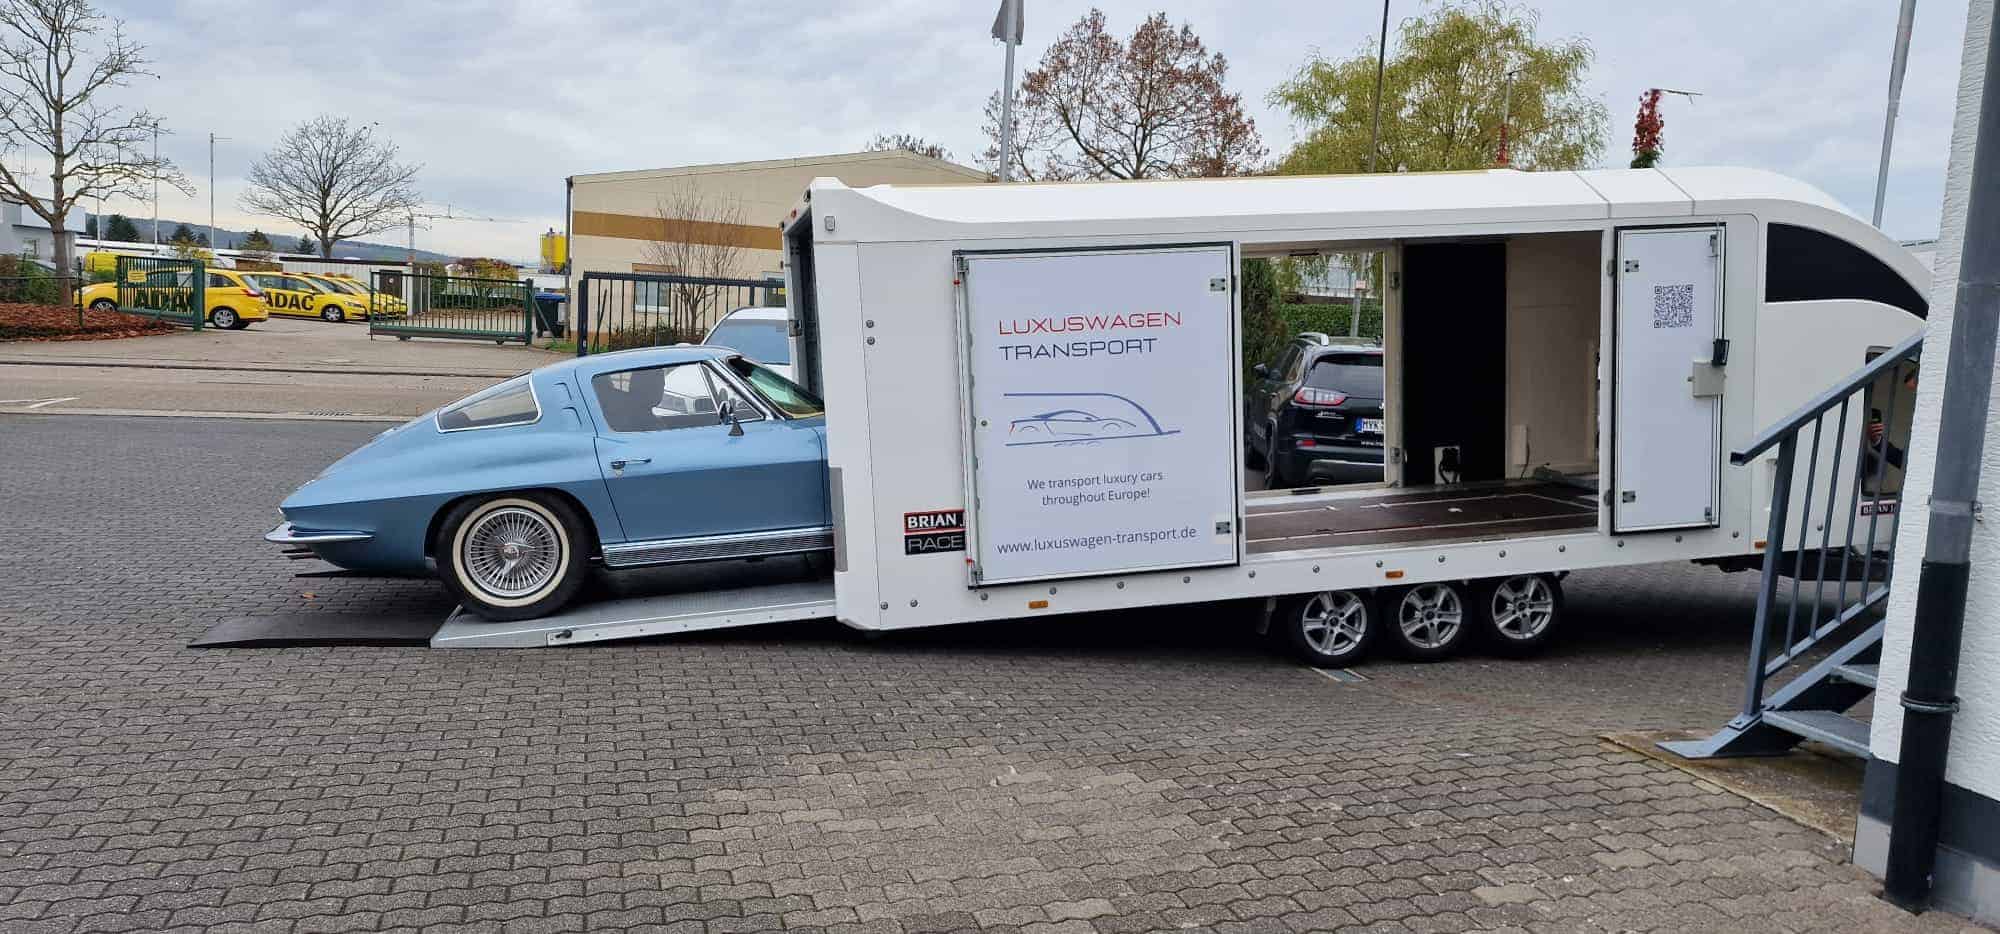 Oldtimer Corvette 2 geschlossen transportieren lassen mit Luxuswagen Transport